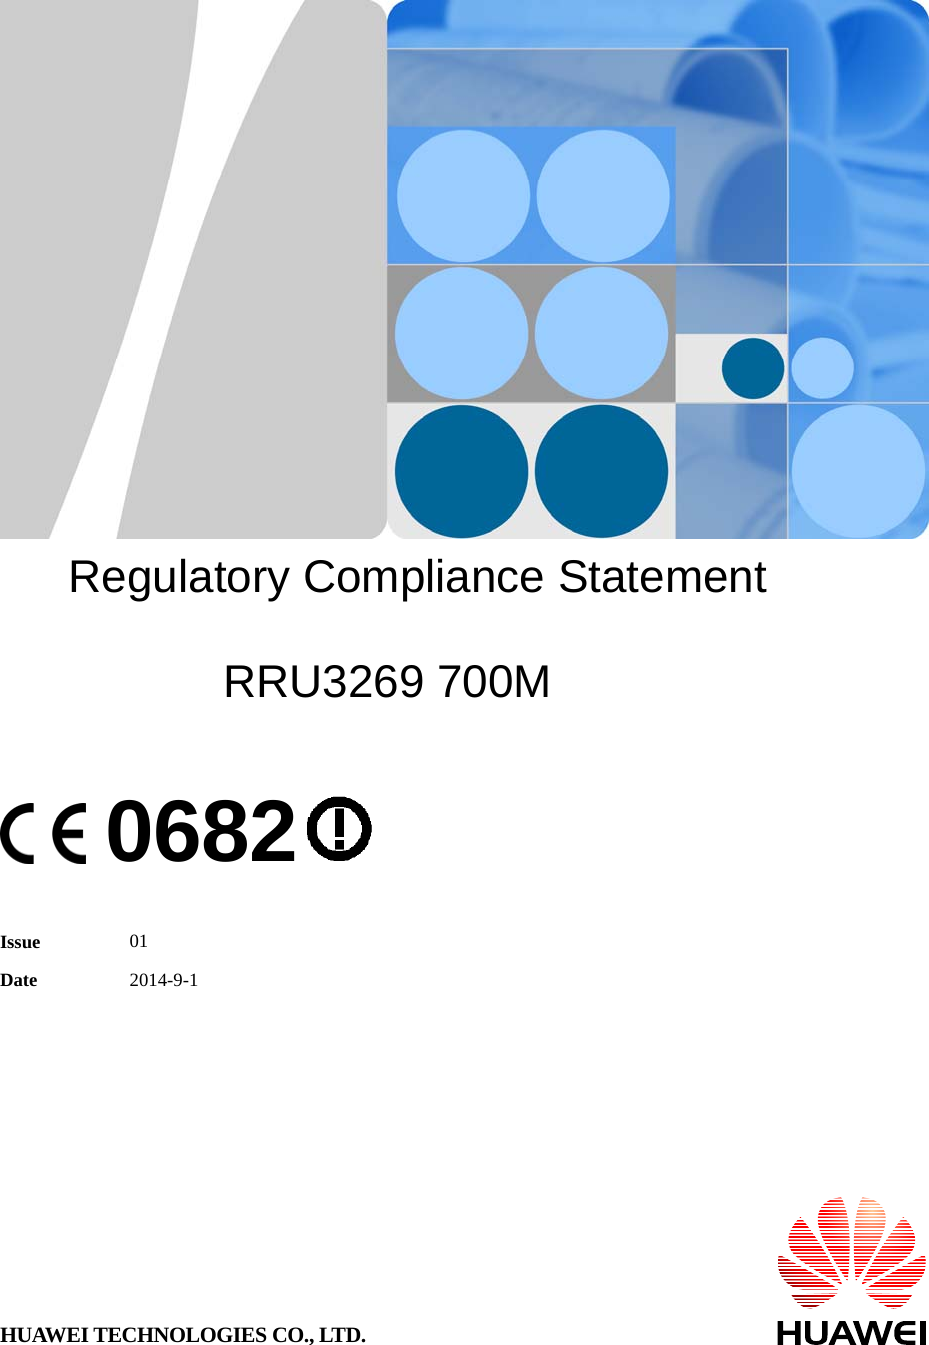        Regulatory Compliance Statement  RRU3269 700M    0682   Issue  01 Date  2014-9-1 HUAWEI TECHNOLOGIES CO., LTD. 